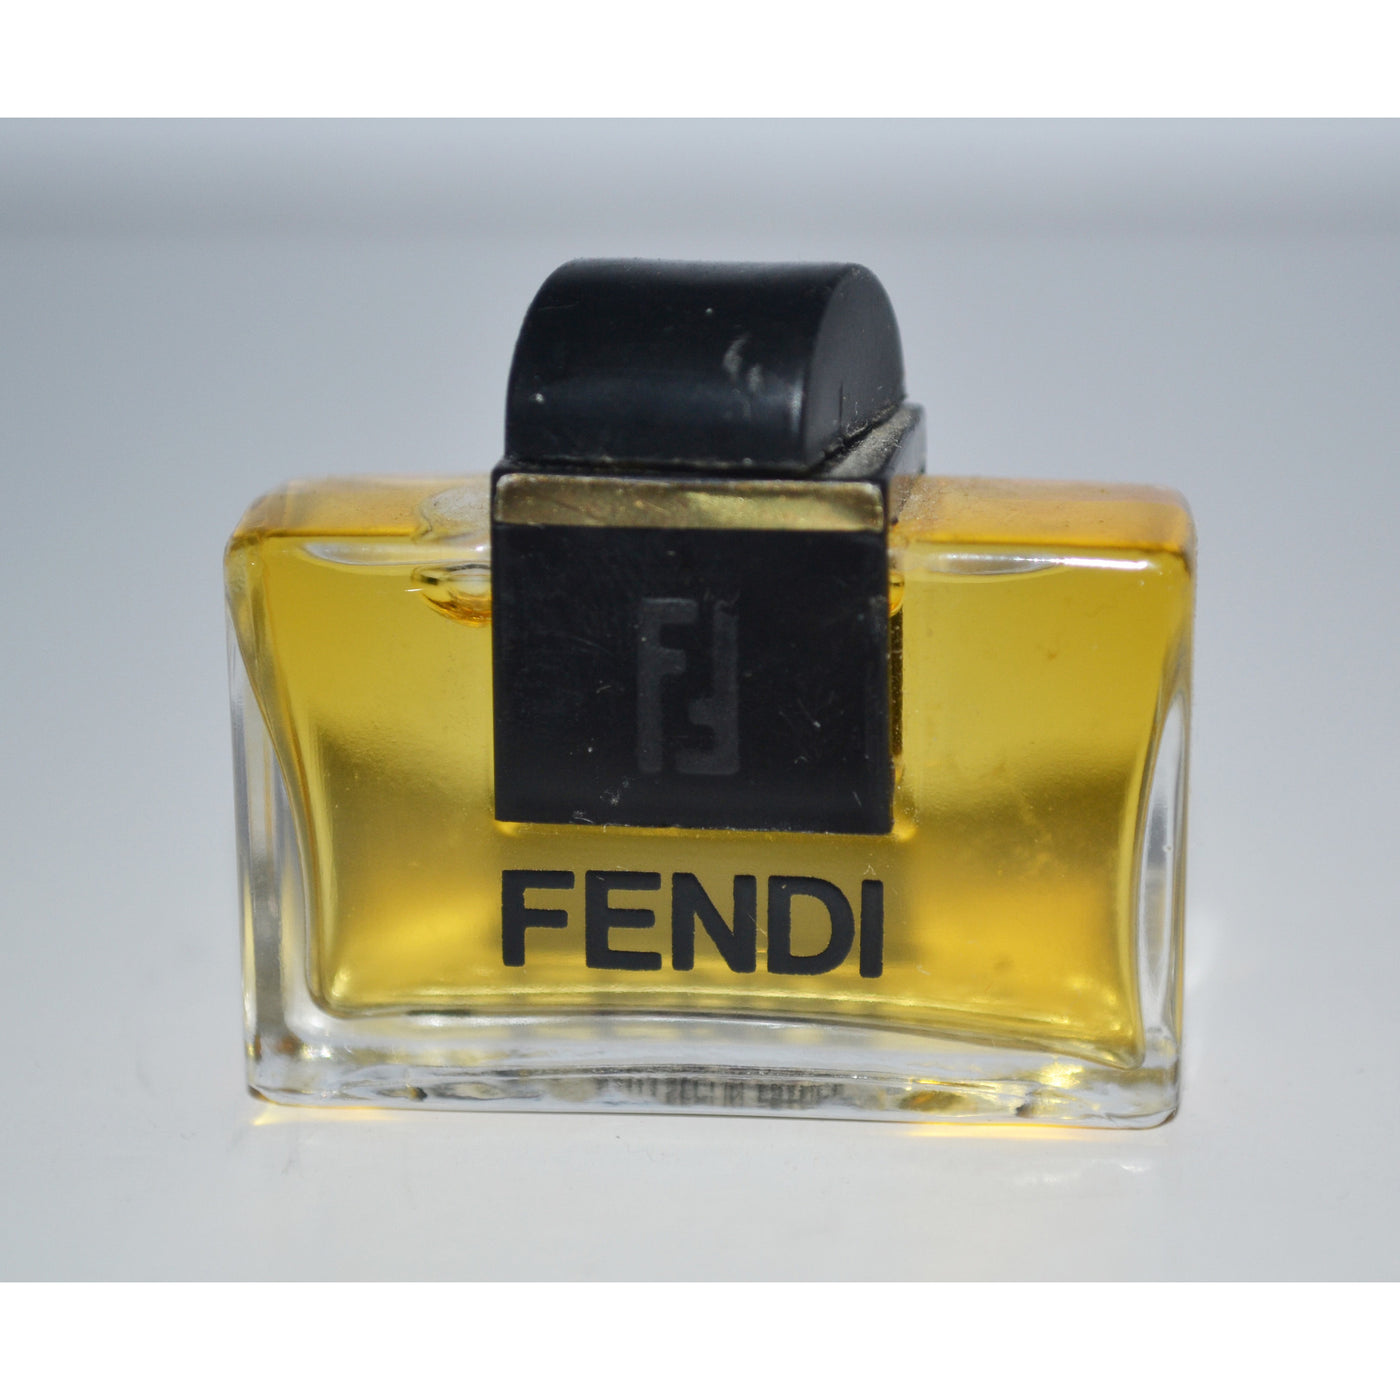 Discontinued Fendi Perfume Mini